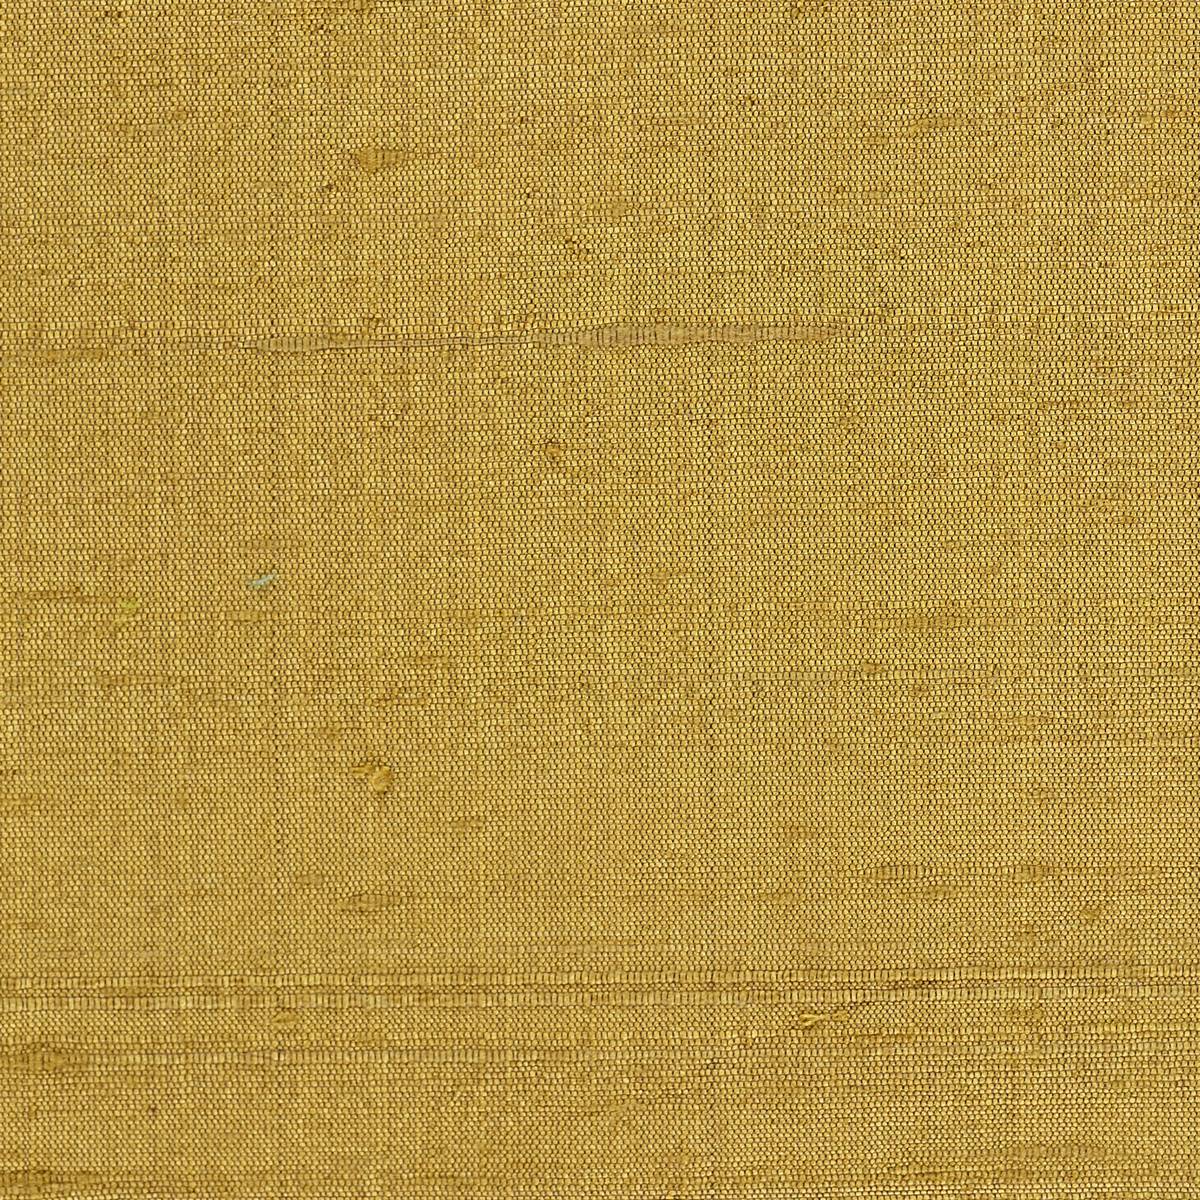 Laminar Gold Fabric by Harlequin